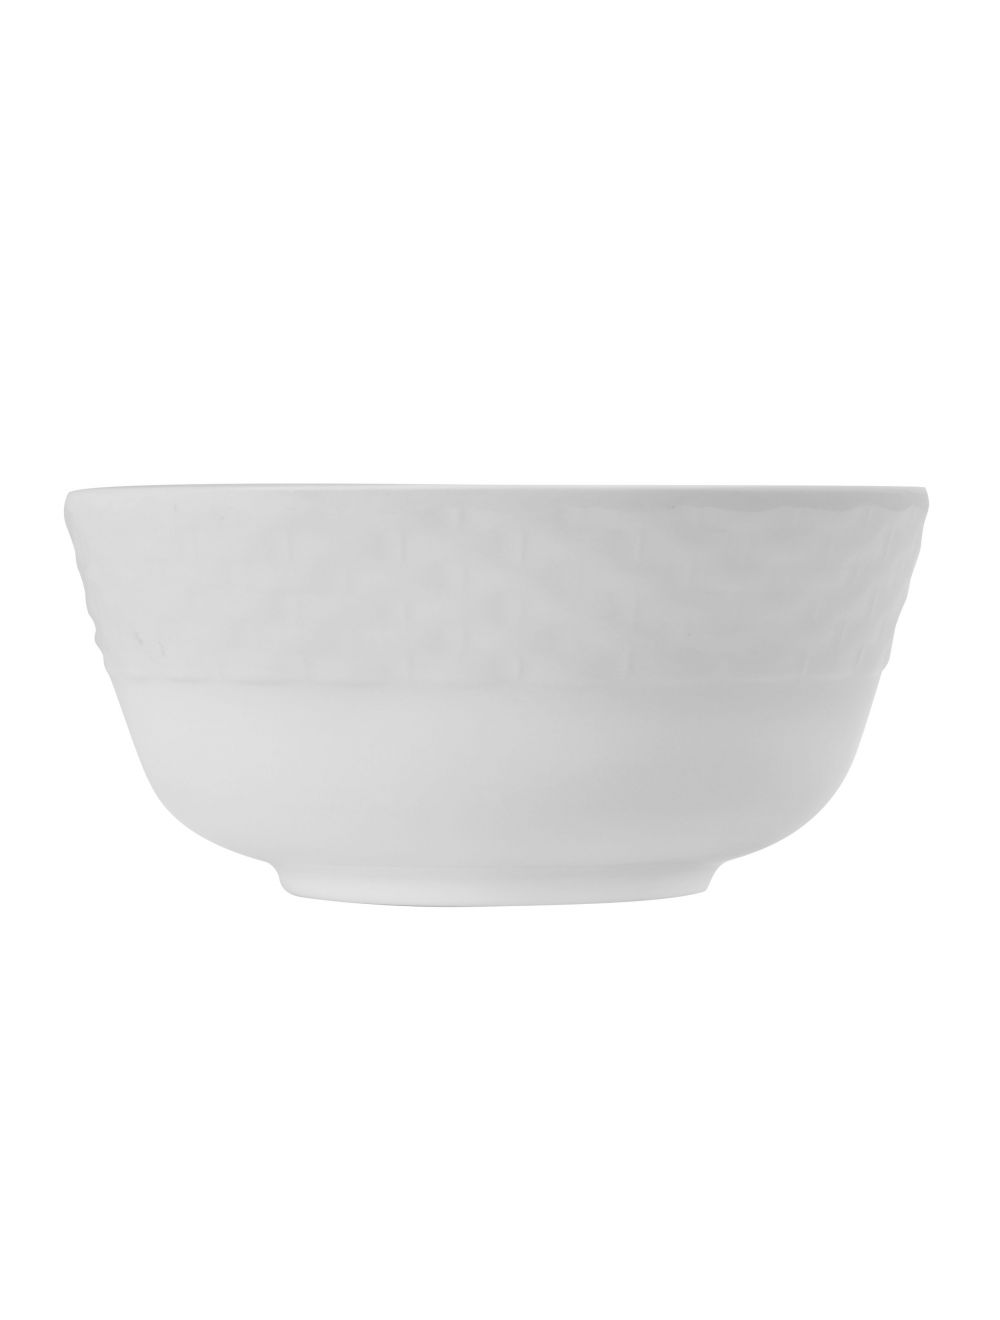 Dinewell Melamine Side Bowl White Topaz-DWB9001W